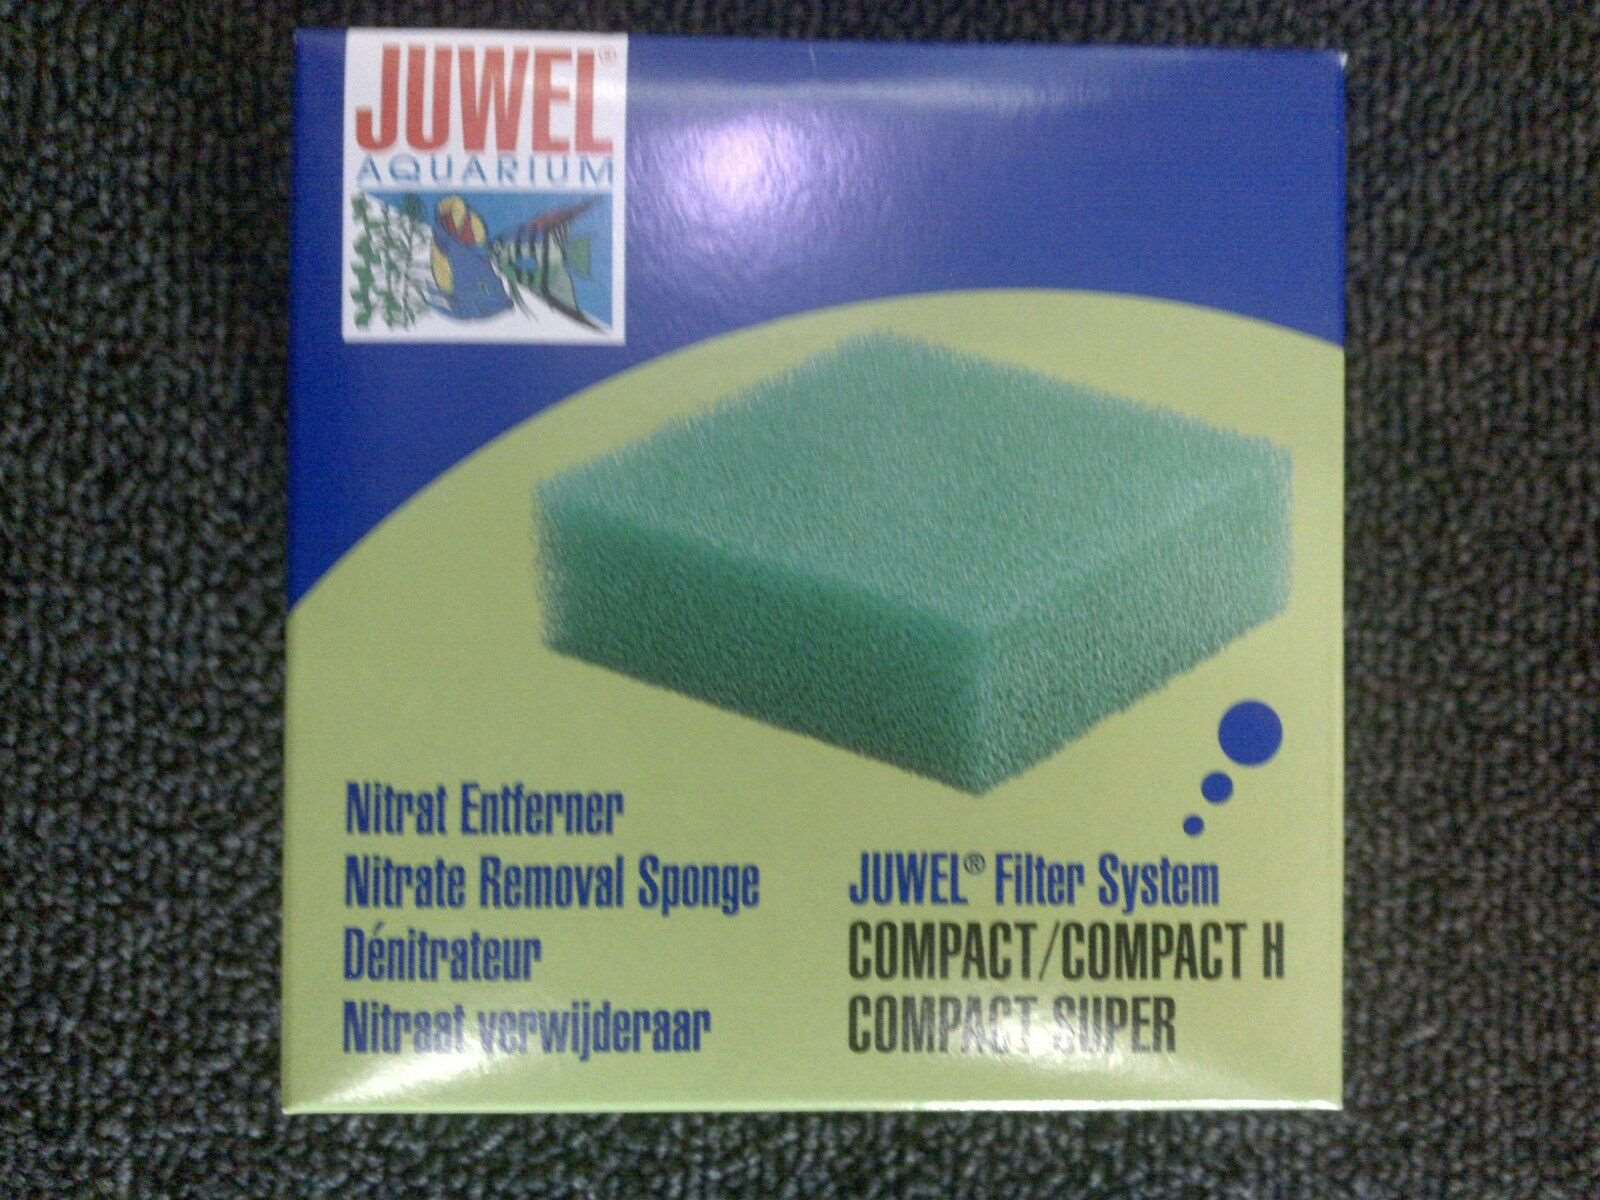 Juwel Compact Nitrax sponges